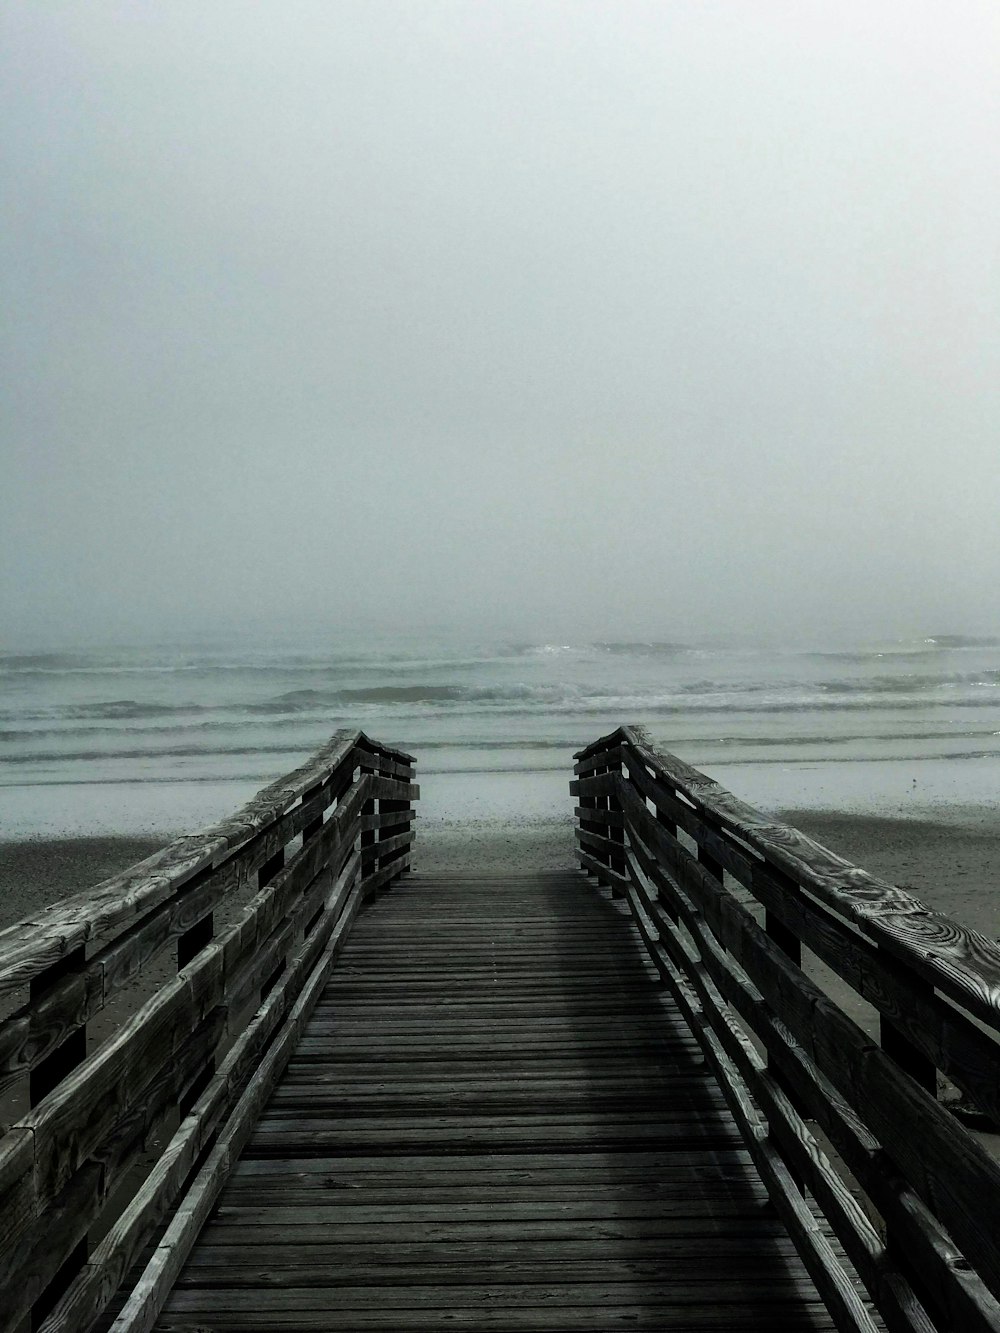 grayscale photo of footbridge through the sea